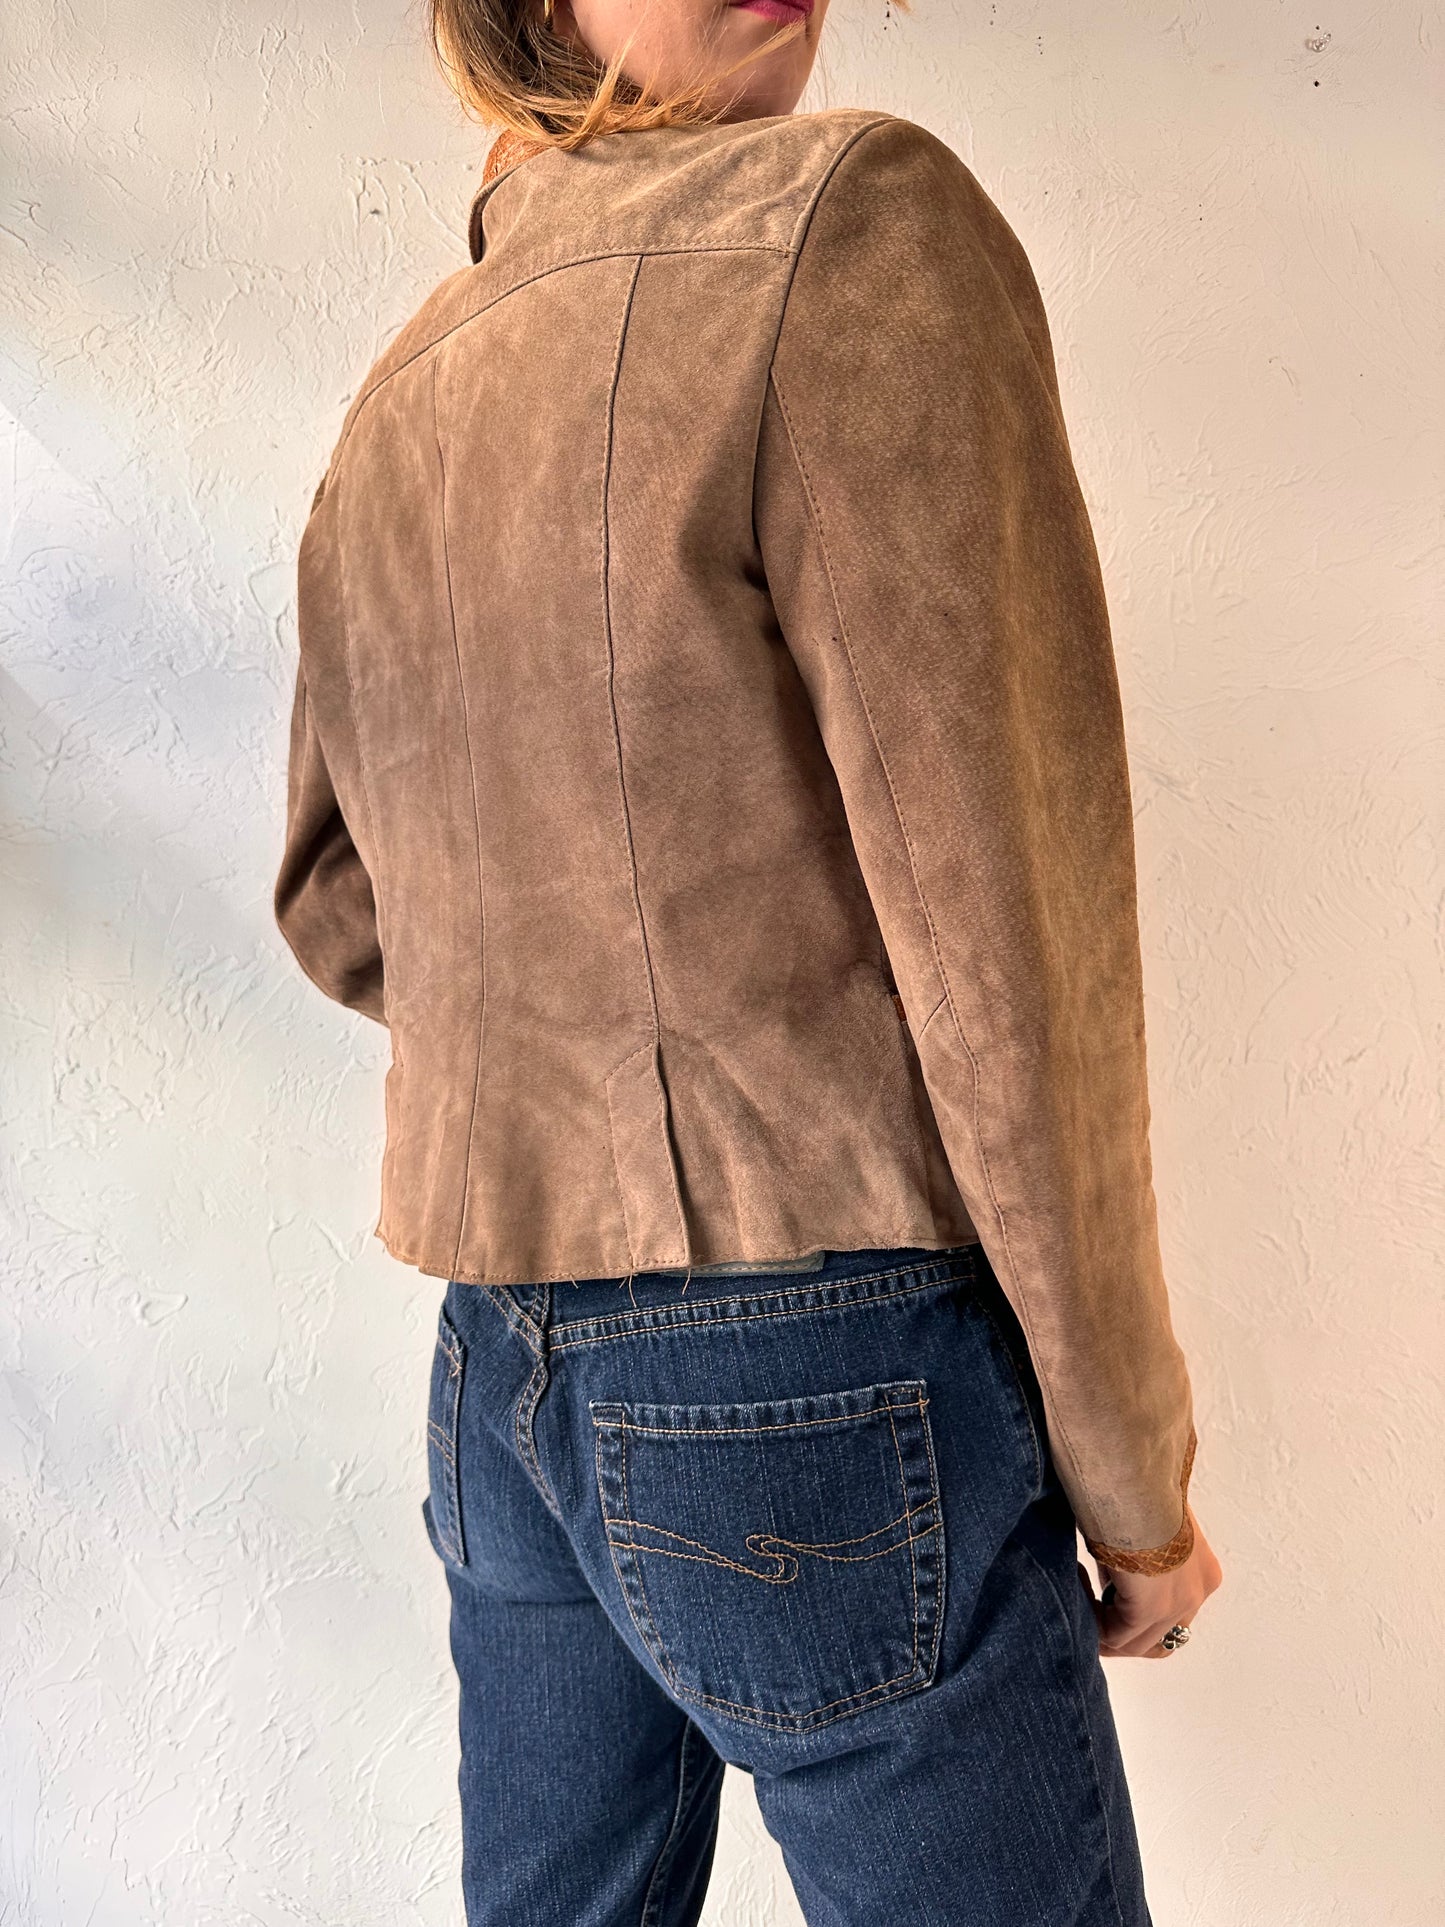 80s 'Gabriel Levy' Beige Suede Leather Jacket / Medium